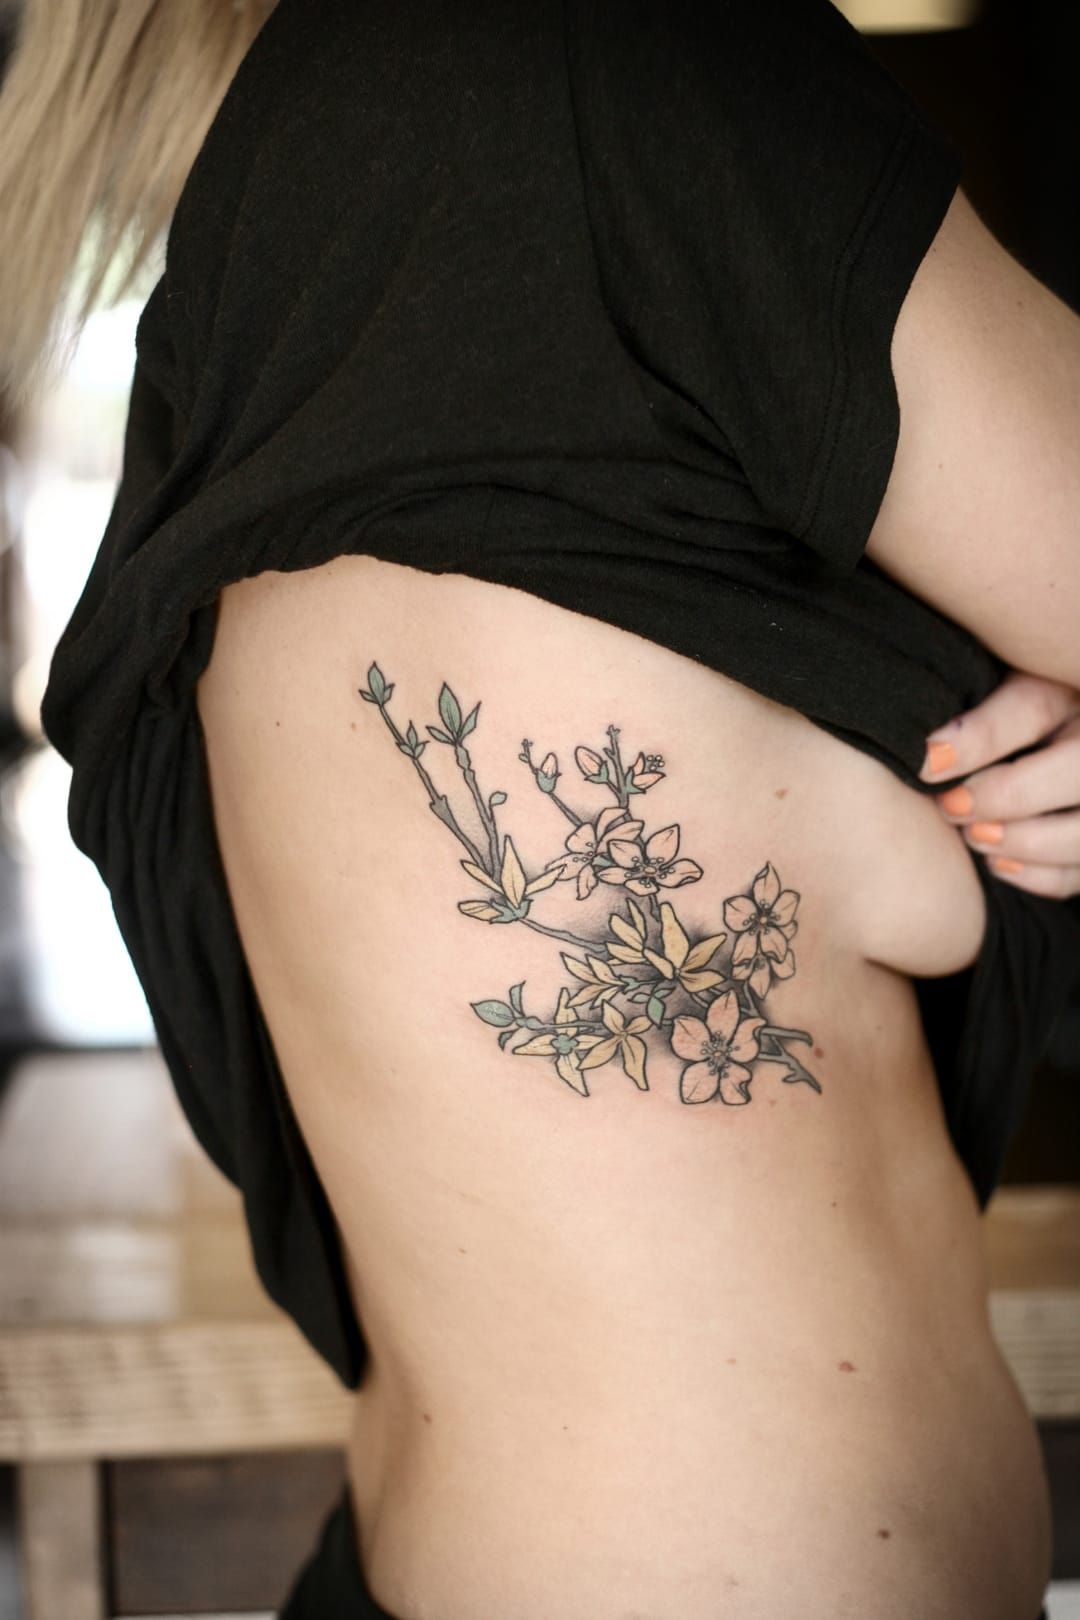 Fine Line Tattoos & Other Tattoo Ideas for Women - Iron & Ink Tattoo